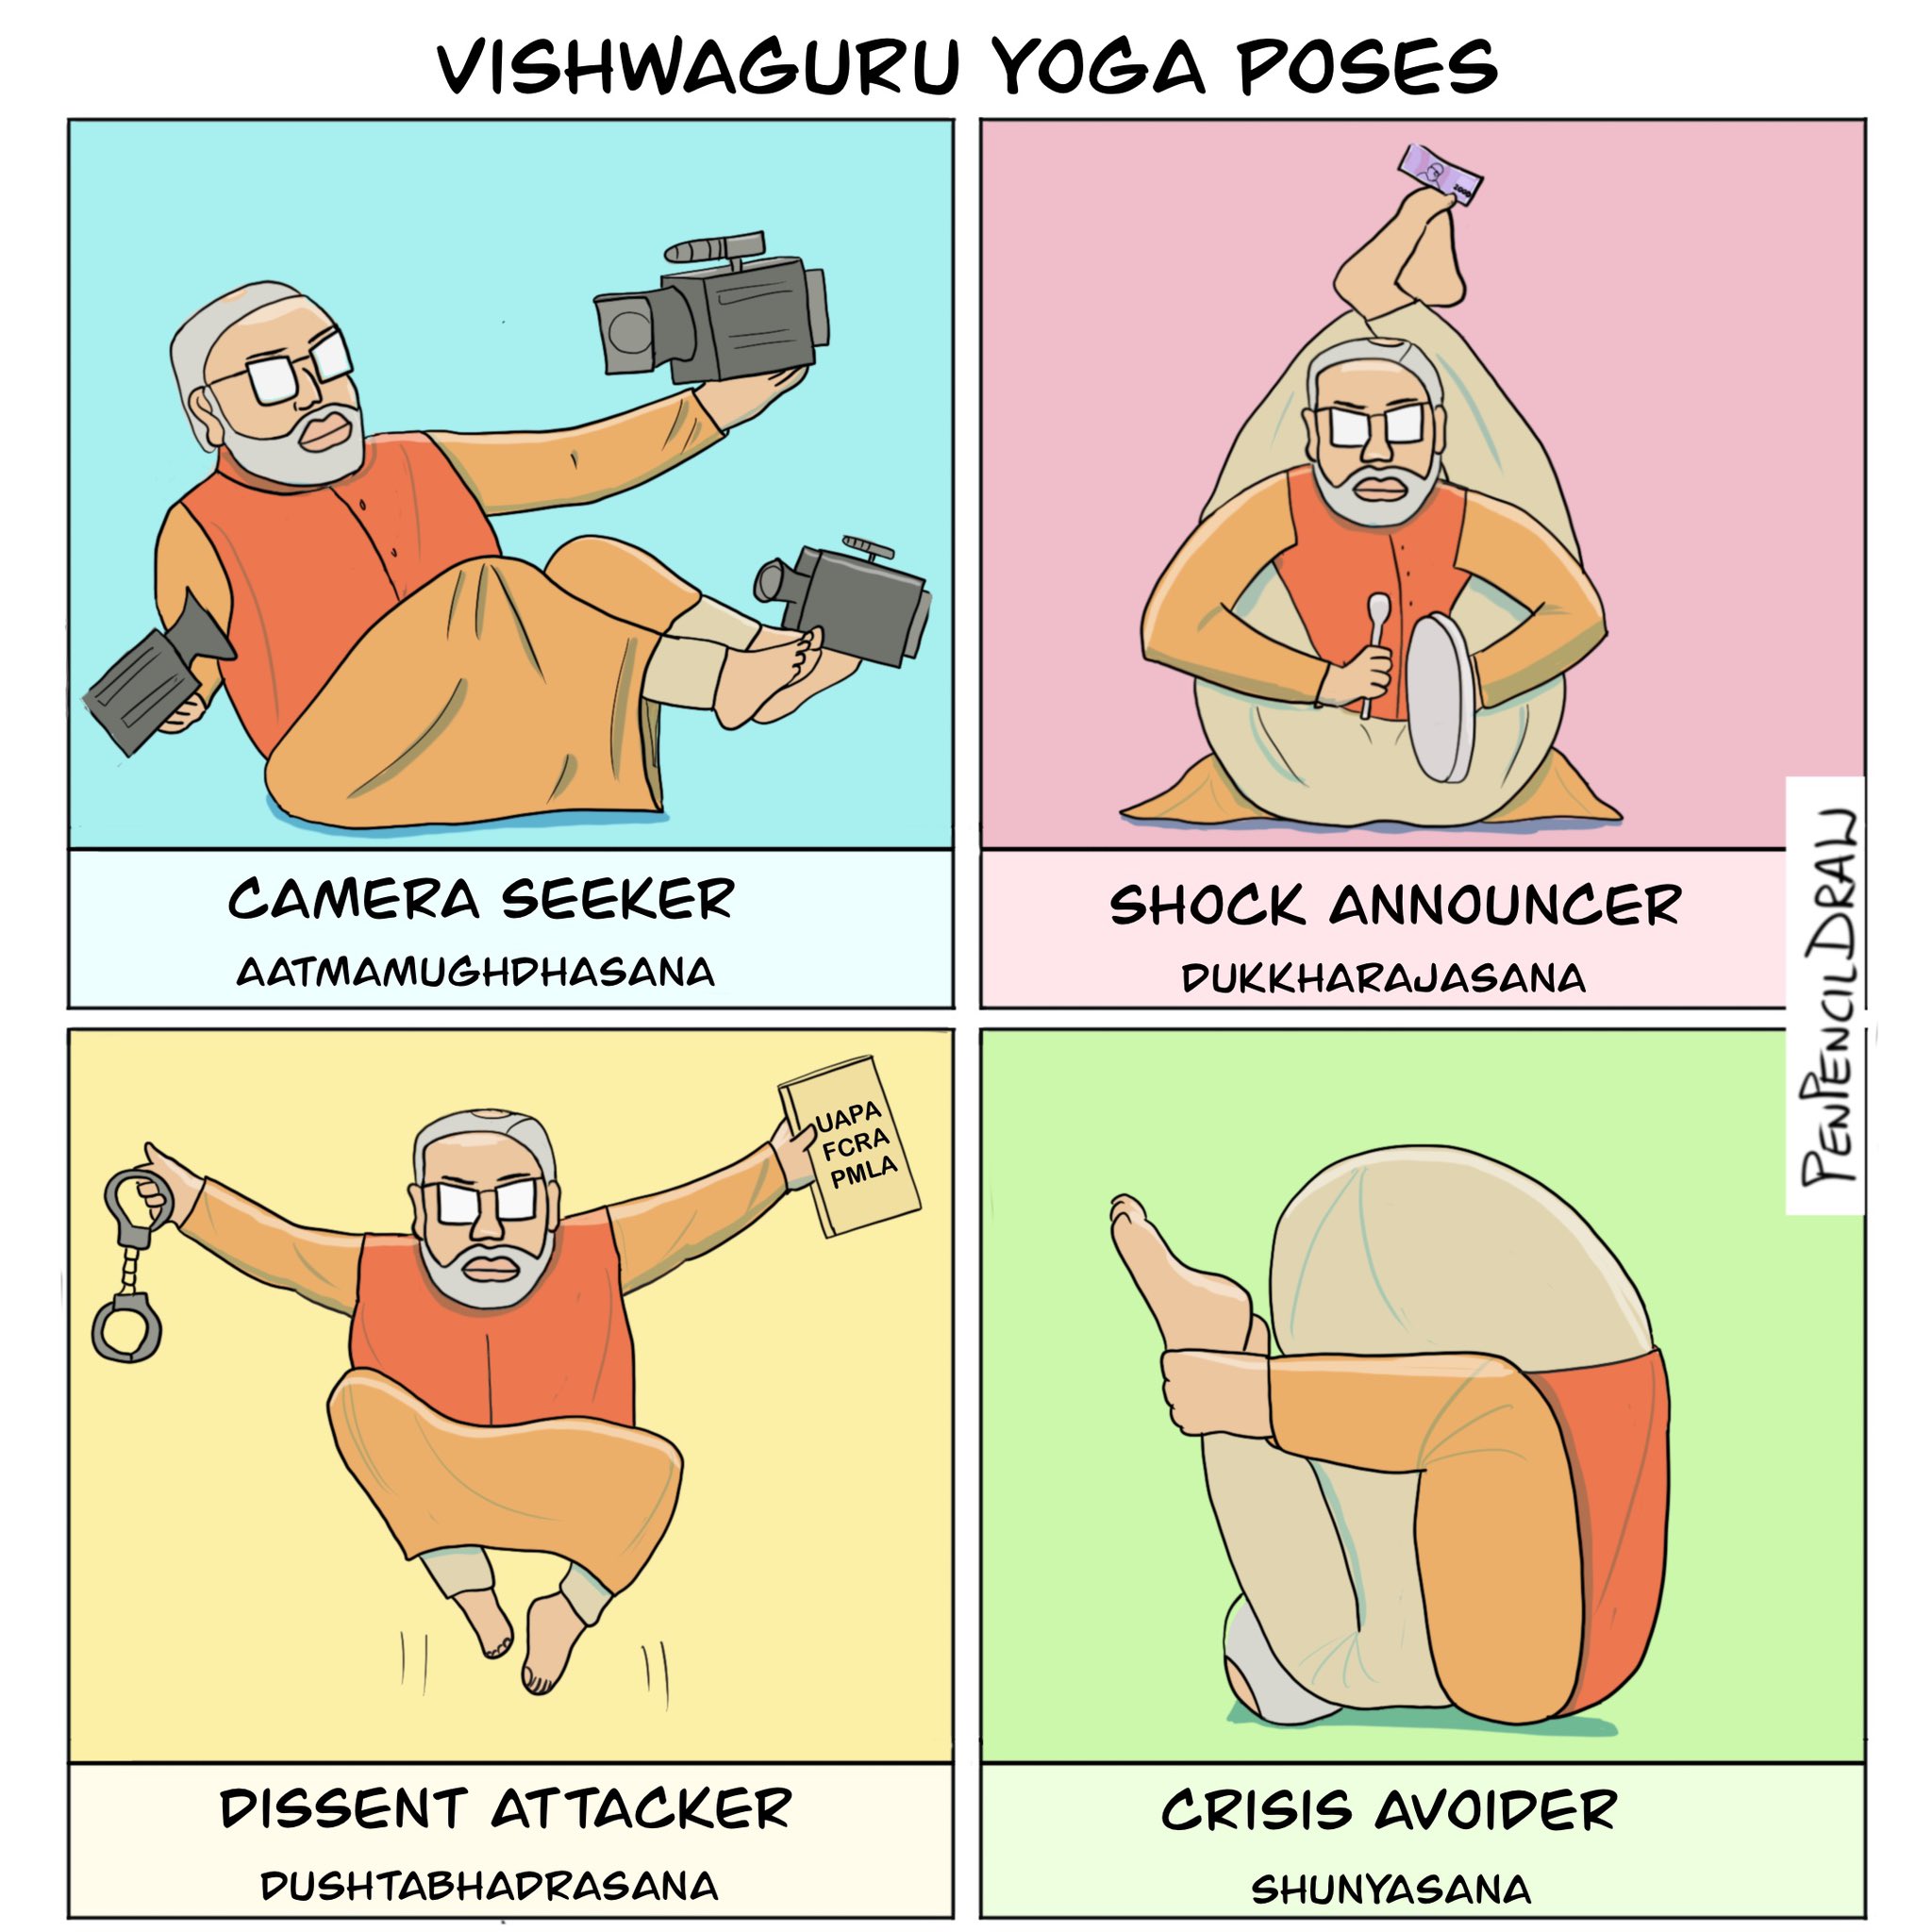 Let's wrap this up my thighs are burning 🔥 Via @yogi_bryan #yogamemes  #yogahumor #yoga #reels | Instagram